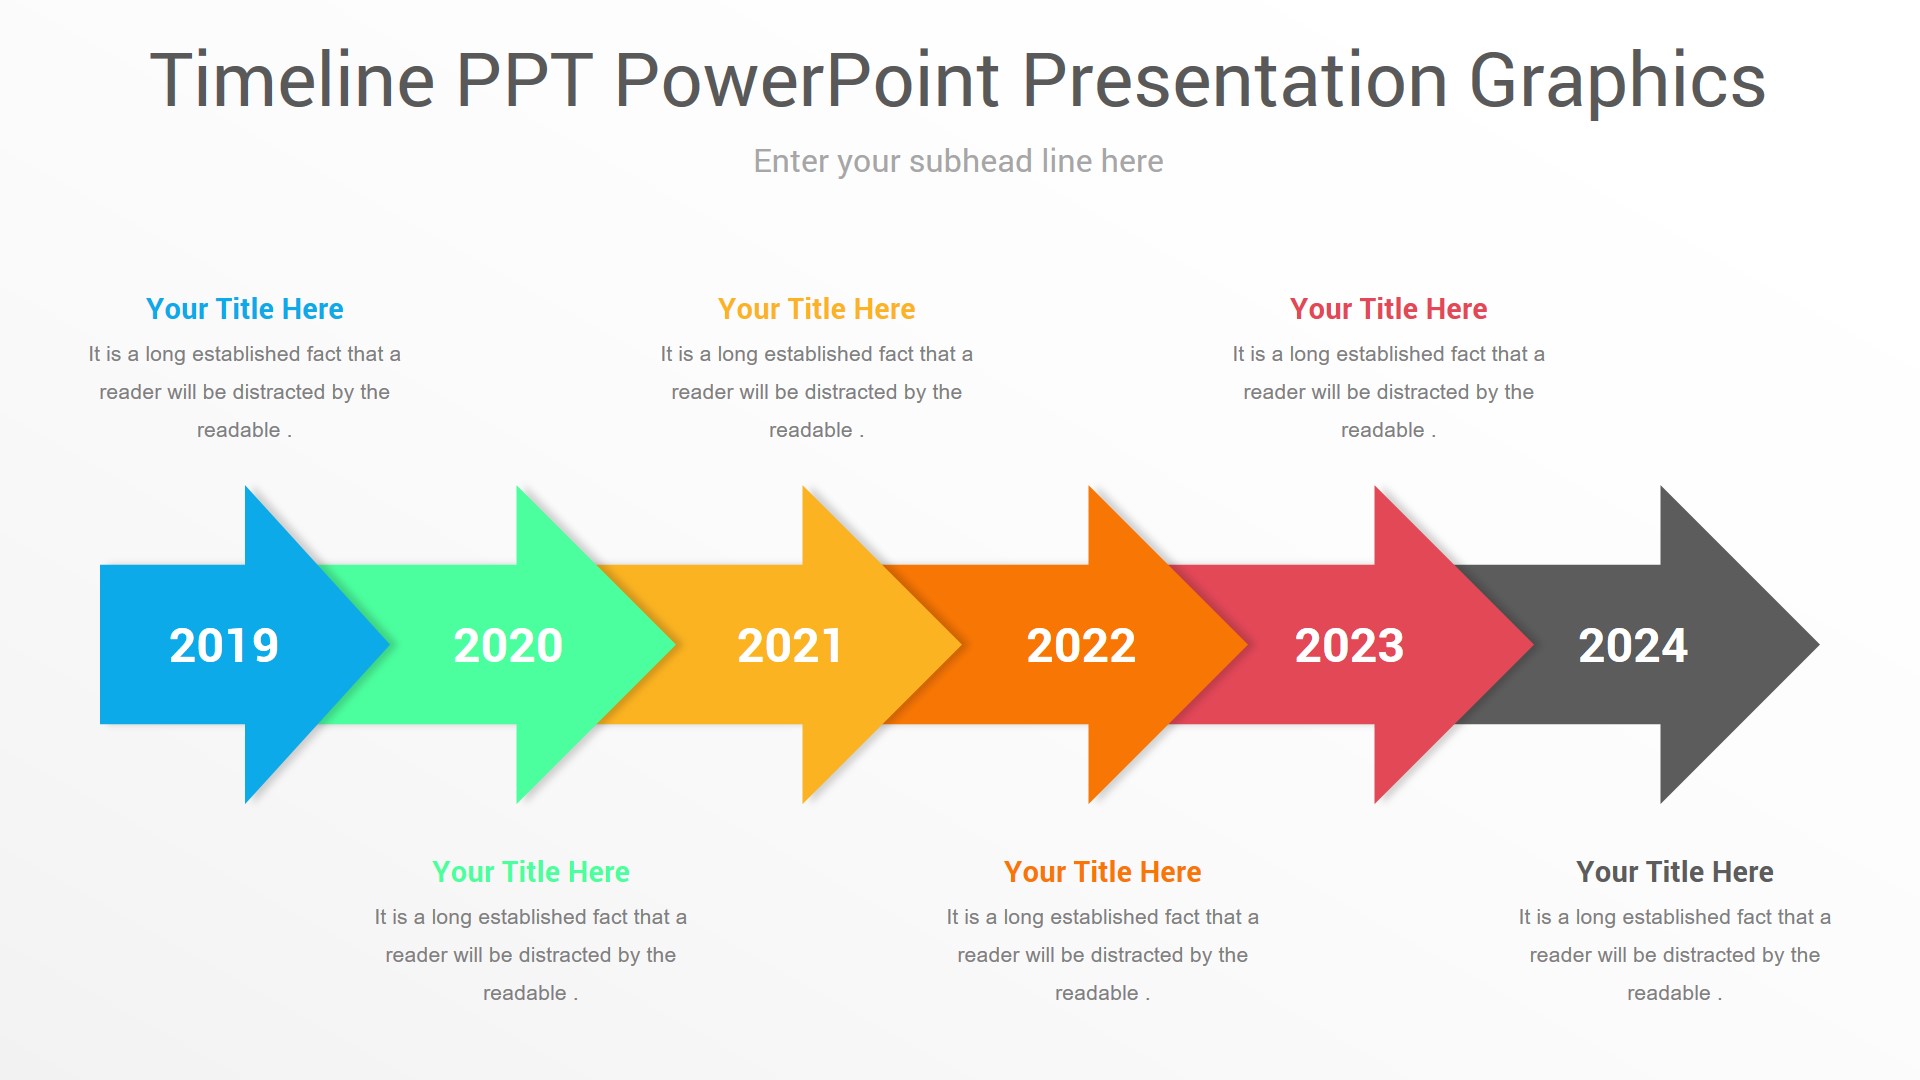 Timeline PPT PowerPoint Presentation Graphics